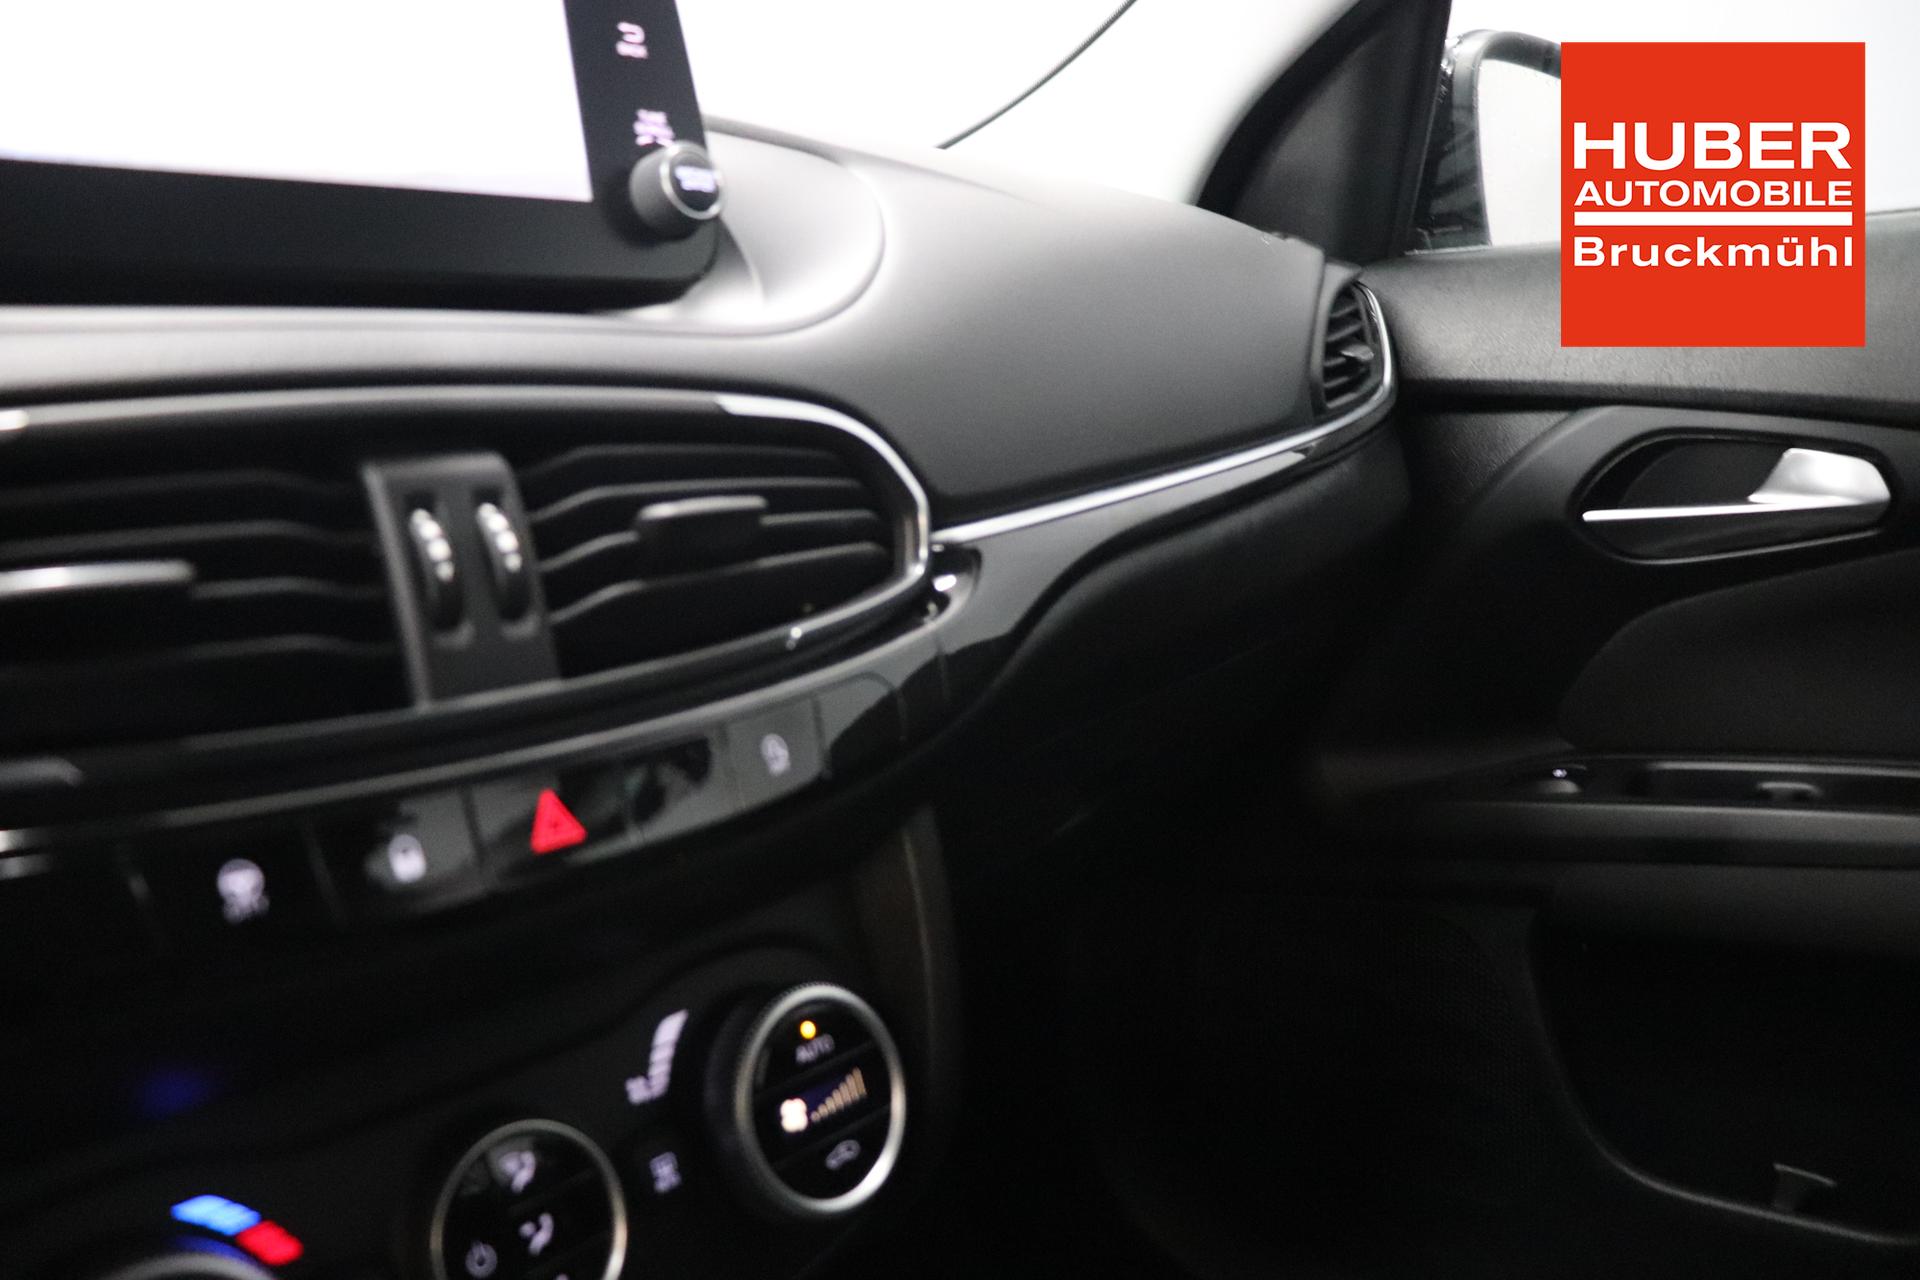 Fiat Tipo 5-Türer CITY LIFE 1.0 T3 74kW Navigationssystem Klimaautomatik,  Sitzheizung, HD-Touchscreen, AppleCarPlay & Android Auto,  Verkehrszeichenerkennung, Nebelscheinwerfer, 16 Zoll Leichtmetallfelgen,  uvm. Lagerfahrzeug Benzin Schalt. 5-Gang